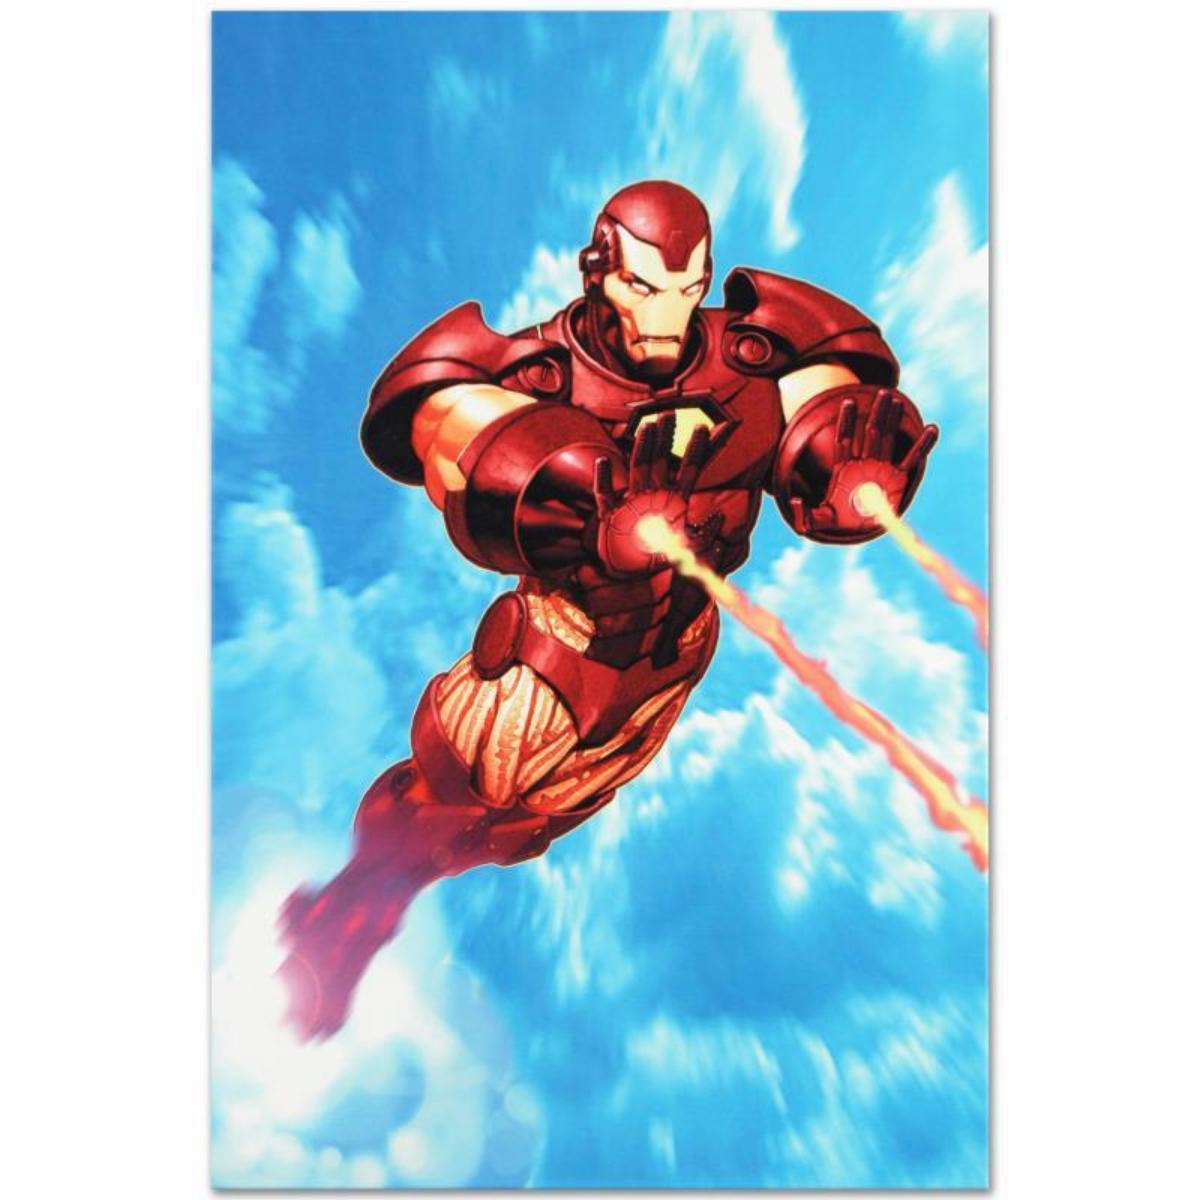 Iron Man: Iron Protocols #1 by Ariel Olivetti